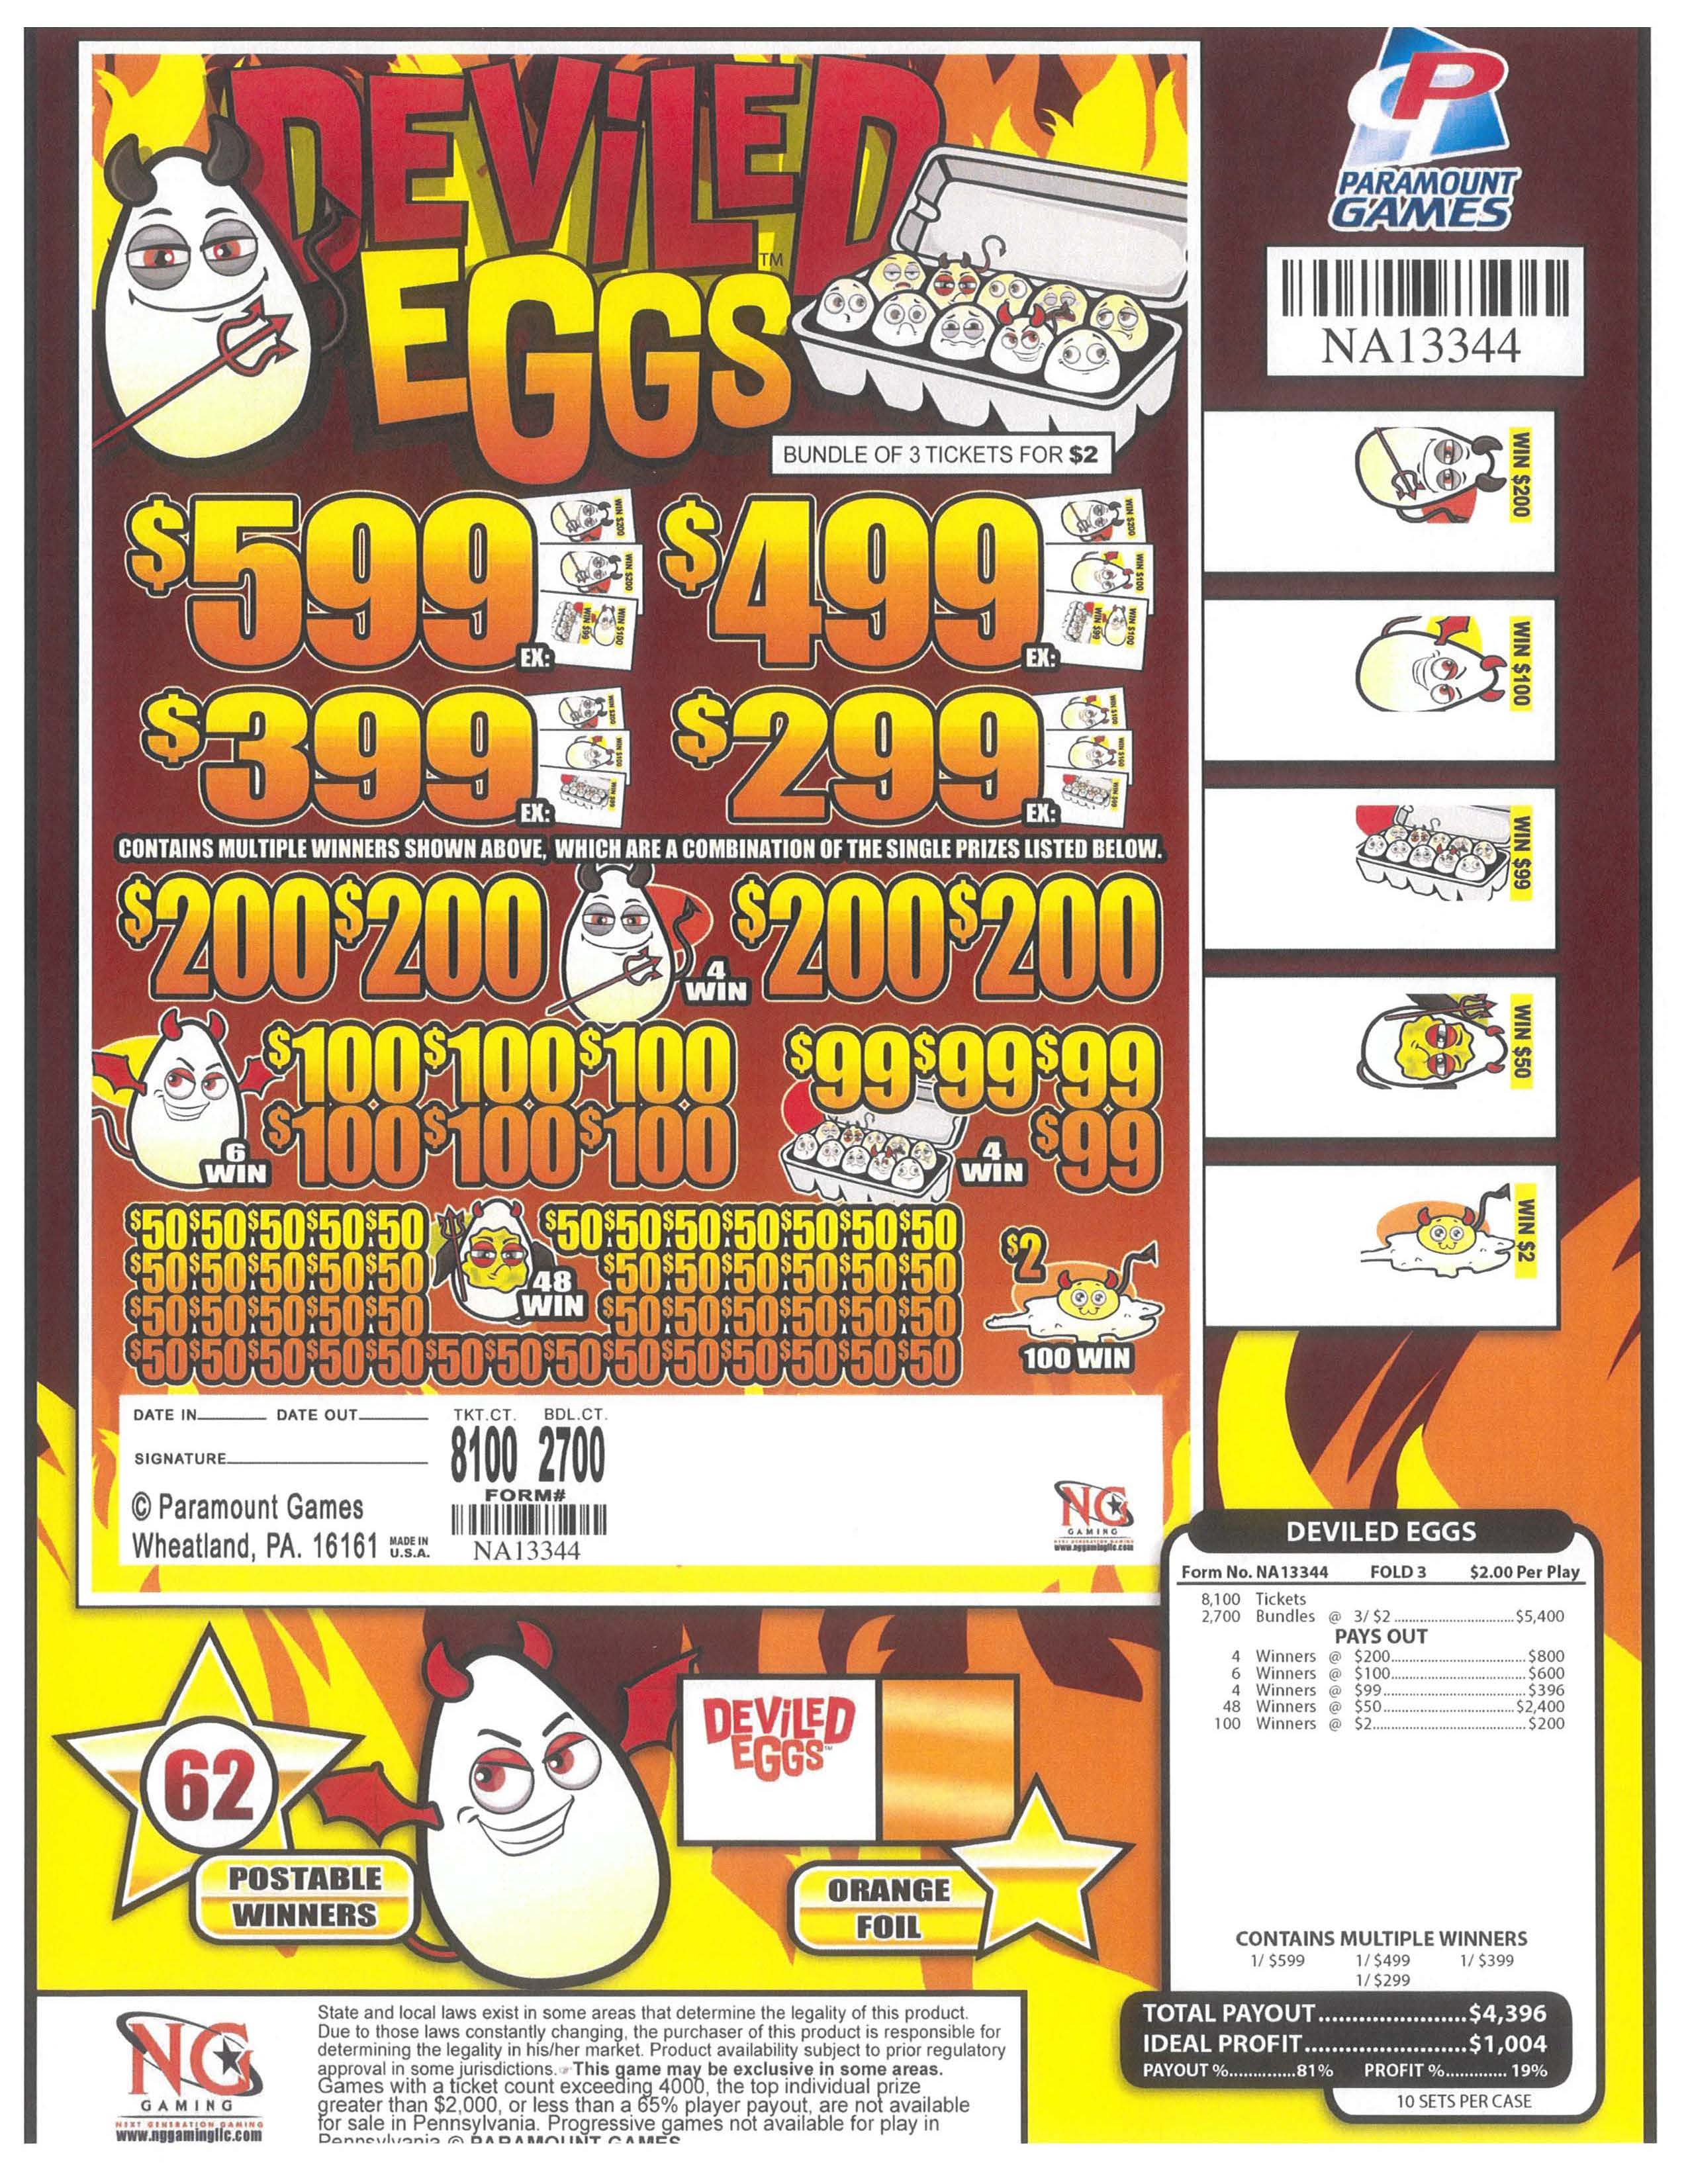 Deviled Eggs - $2 Jar Ticket